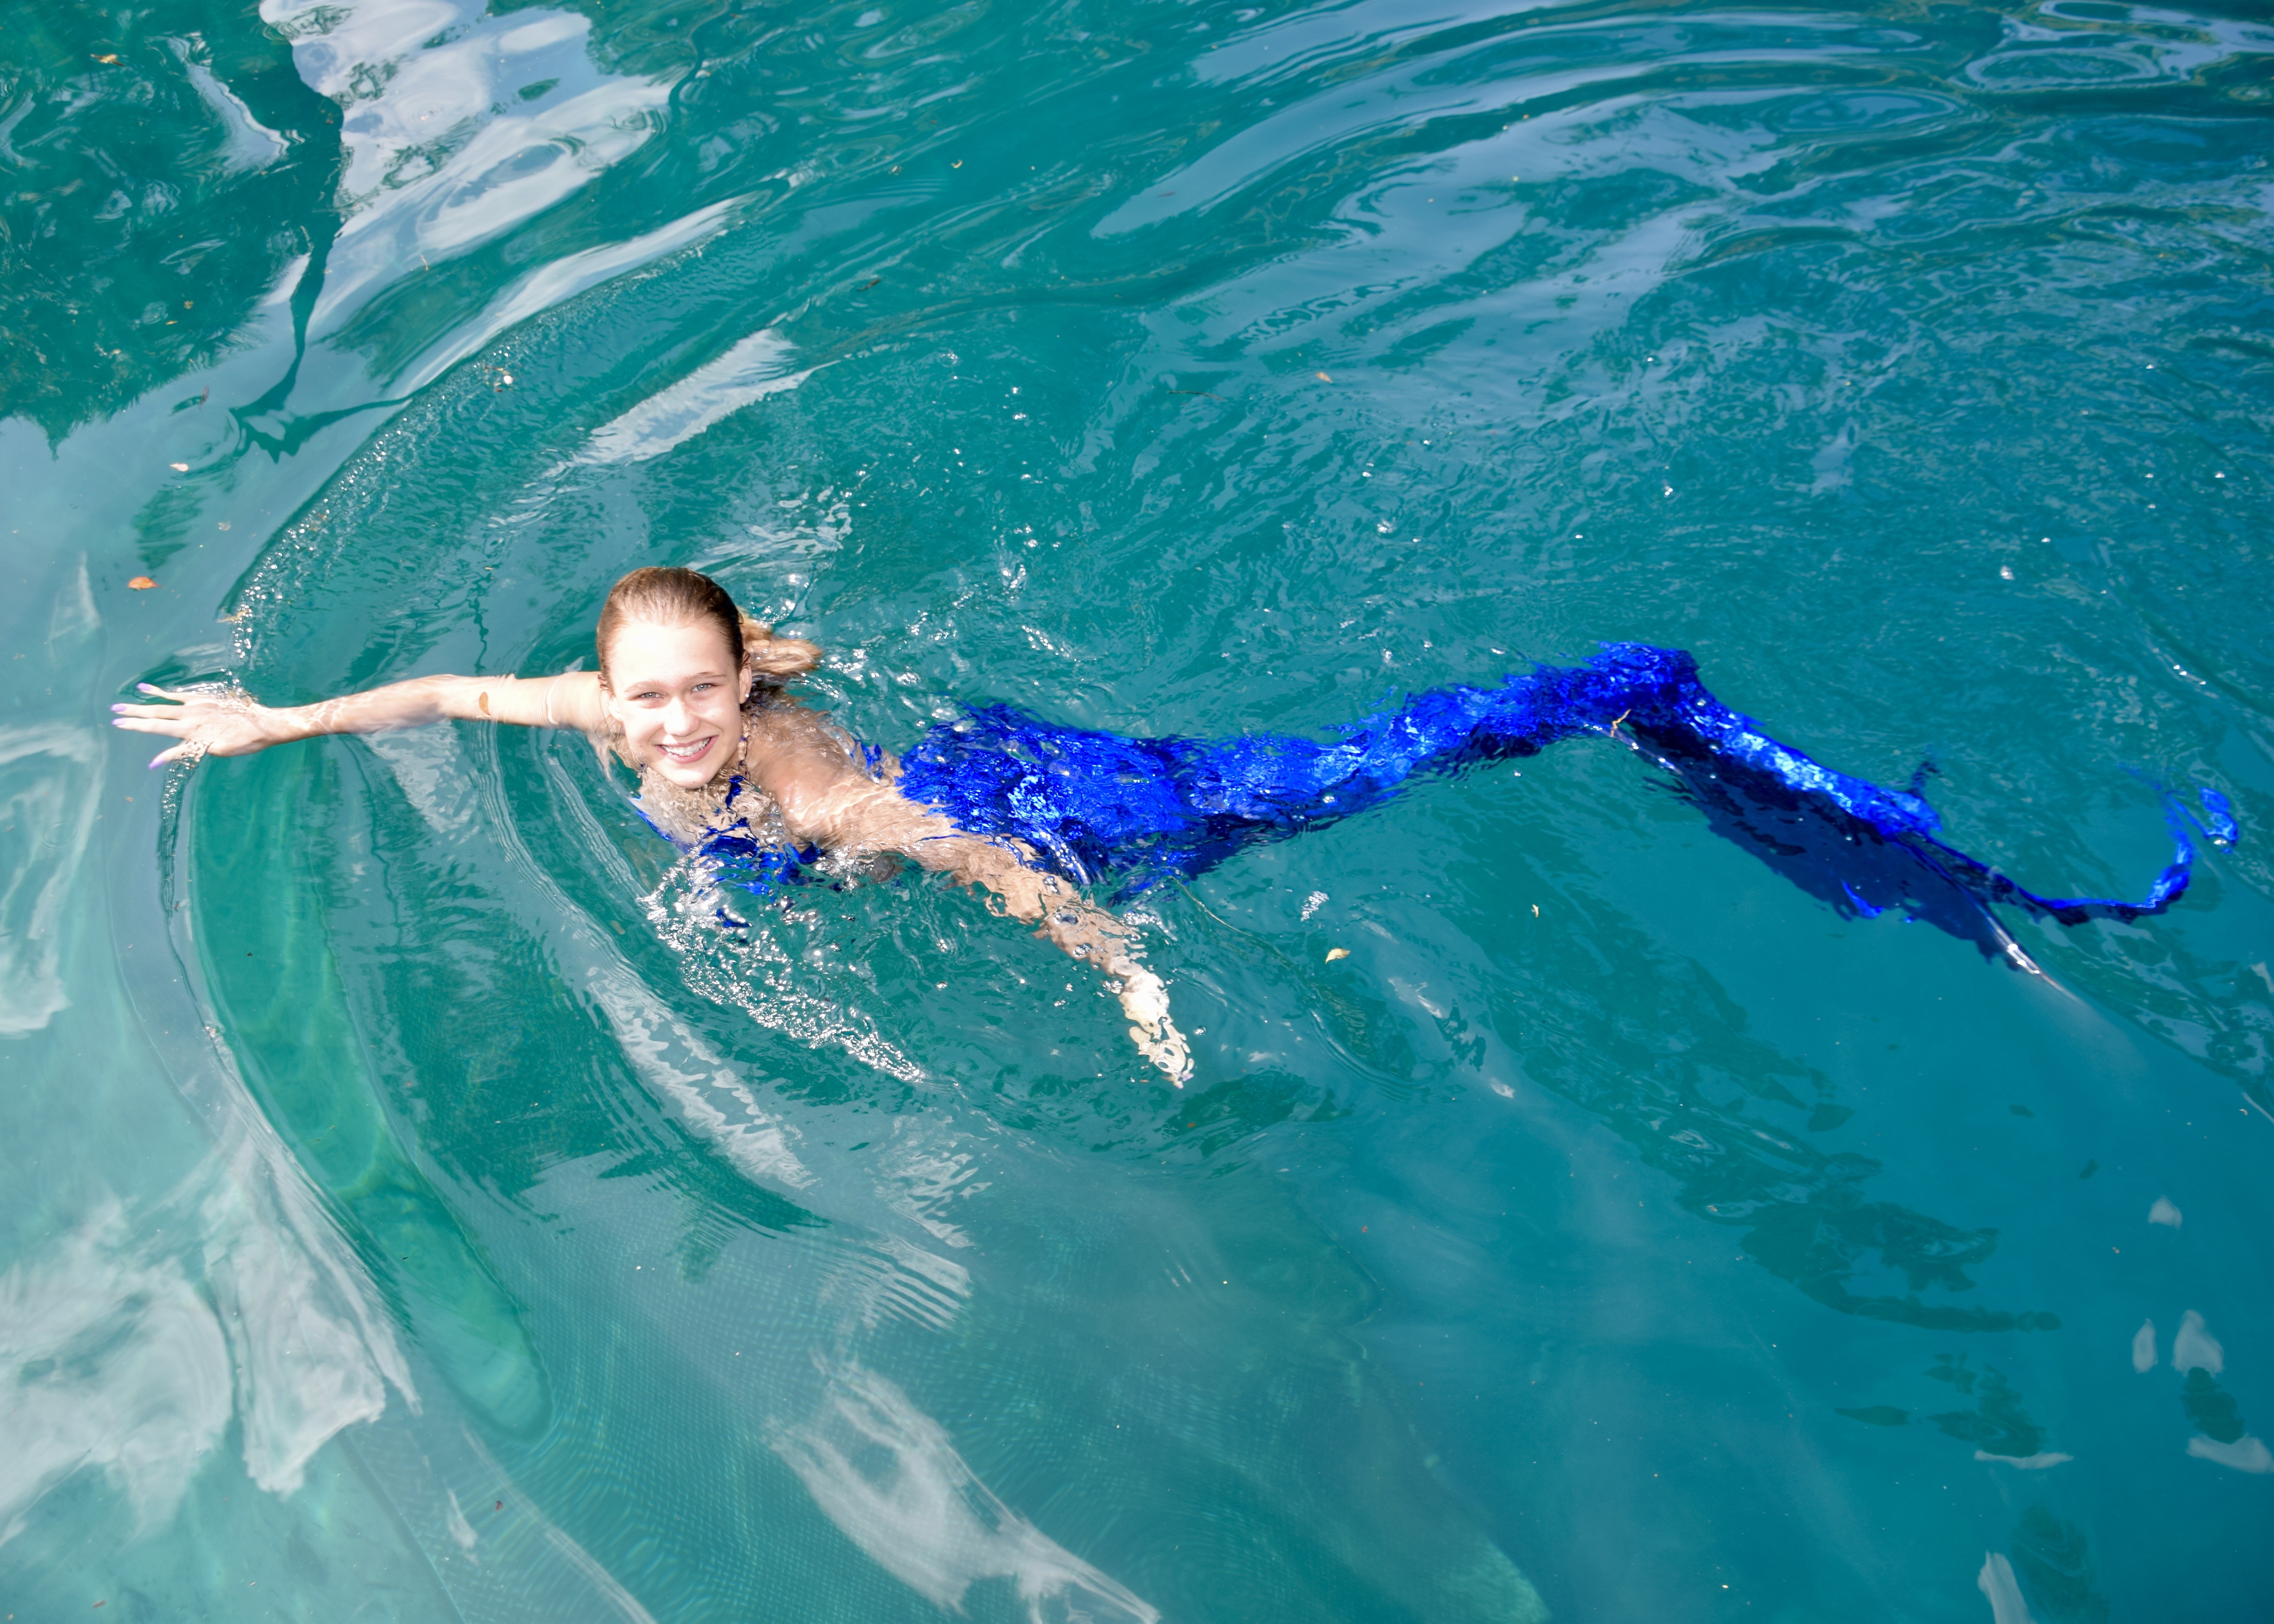 Mermaid Training Courses show you how t swim like a mernaid